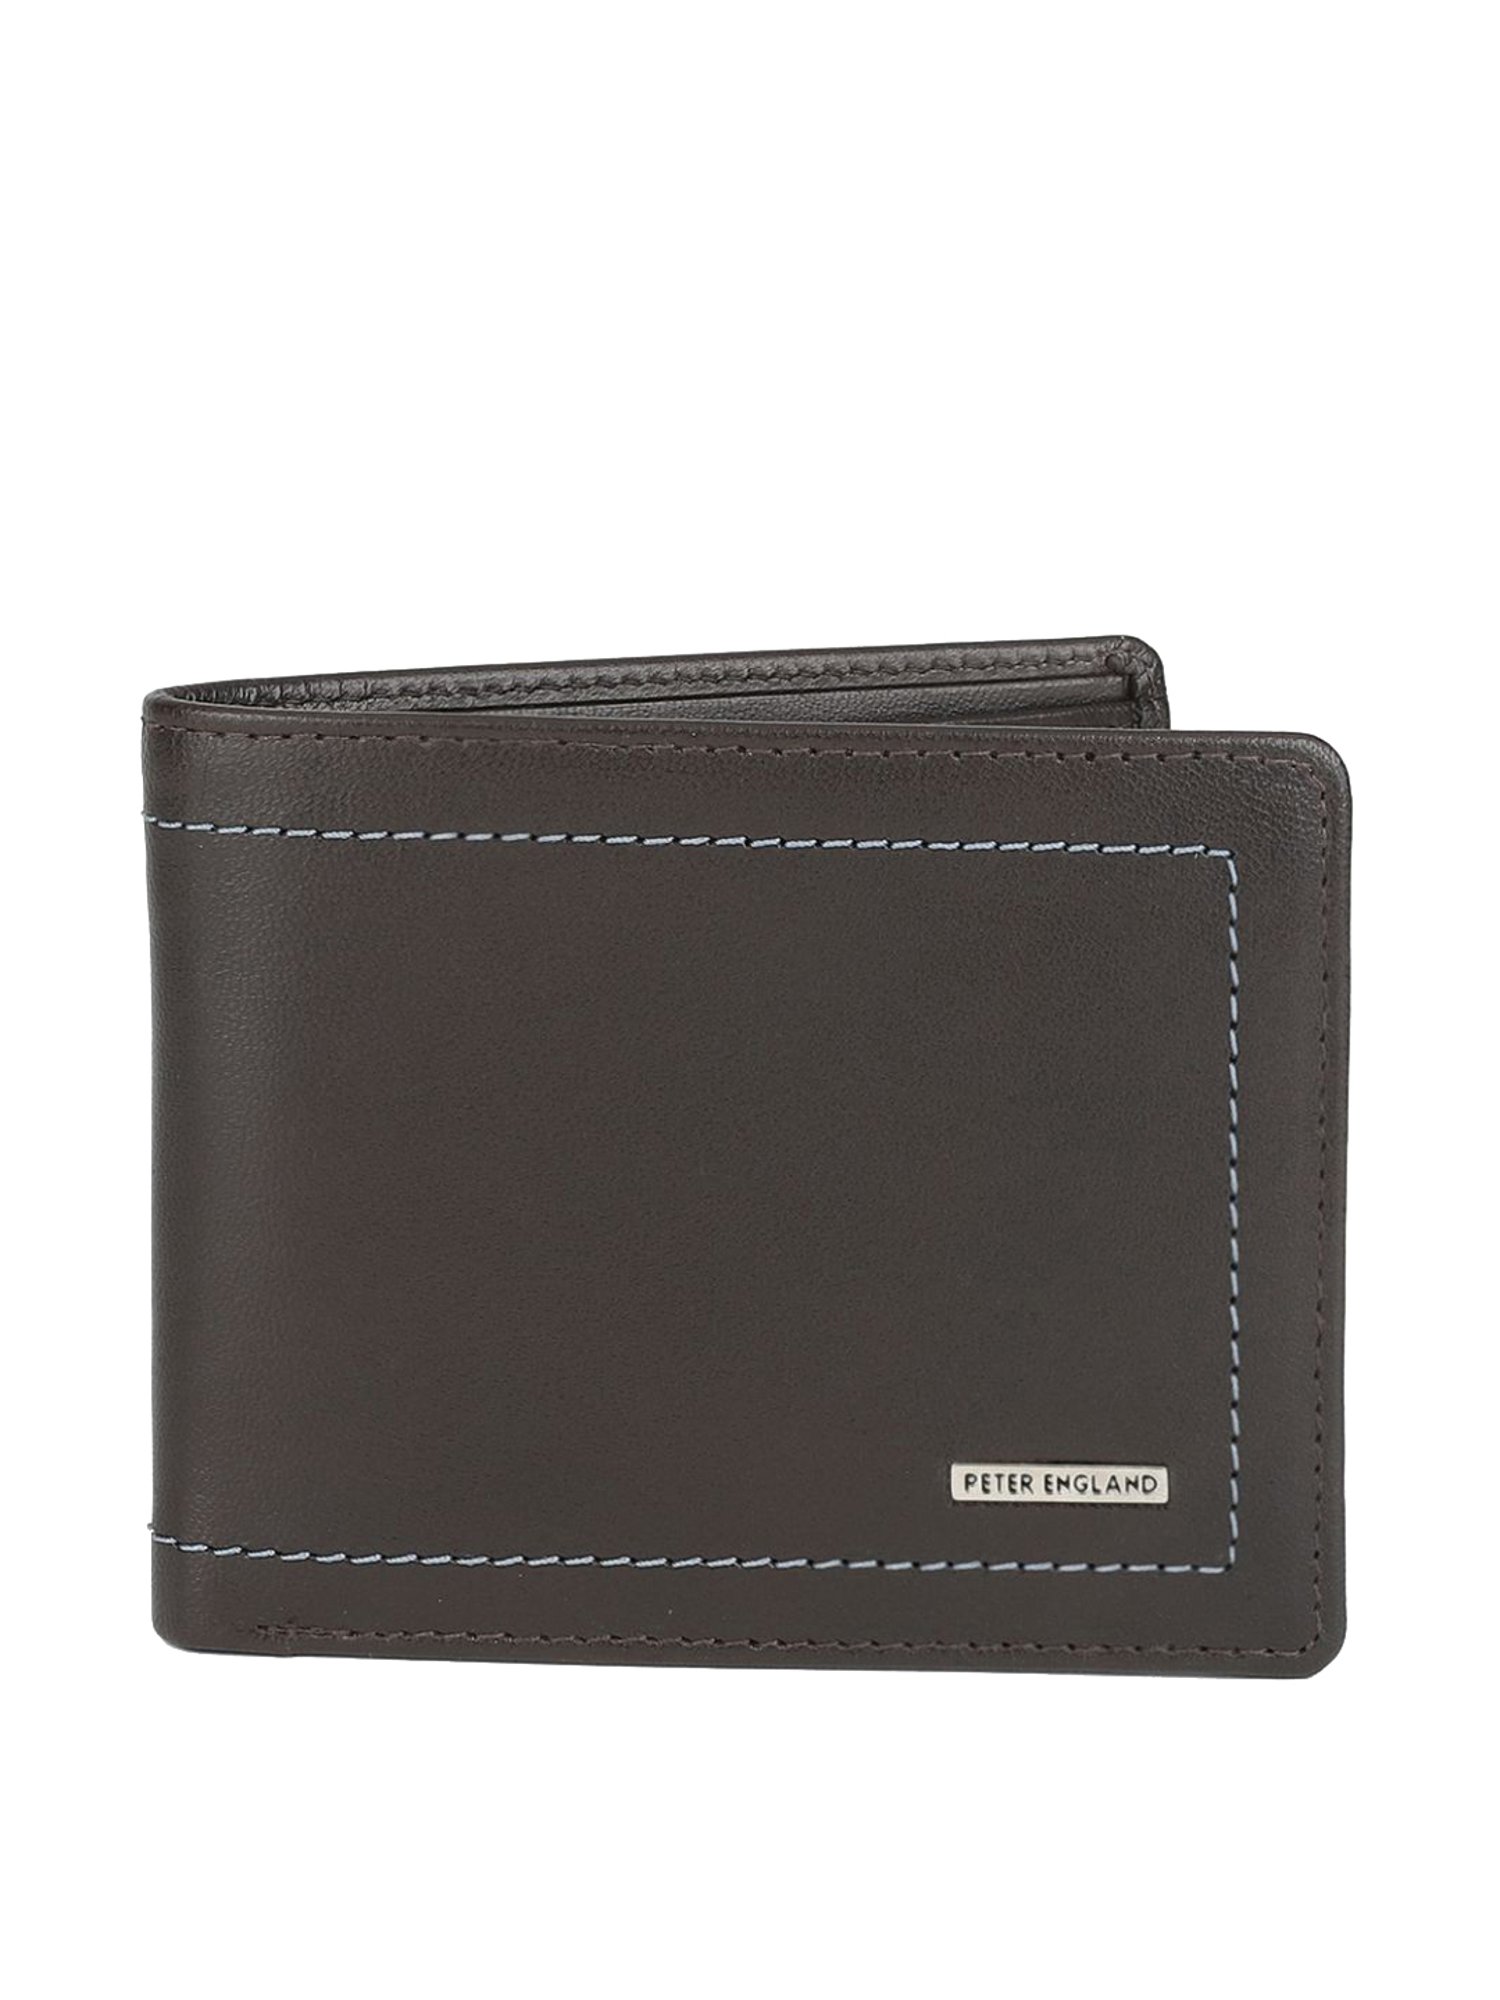 Buy Men Navy Print Genuine Leather Wallet Online - 701987 | Peter England